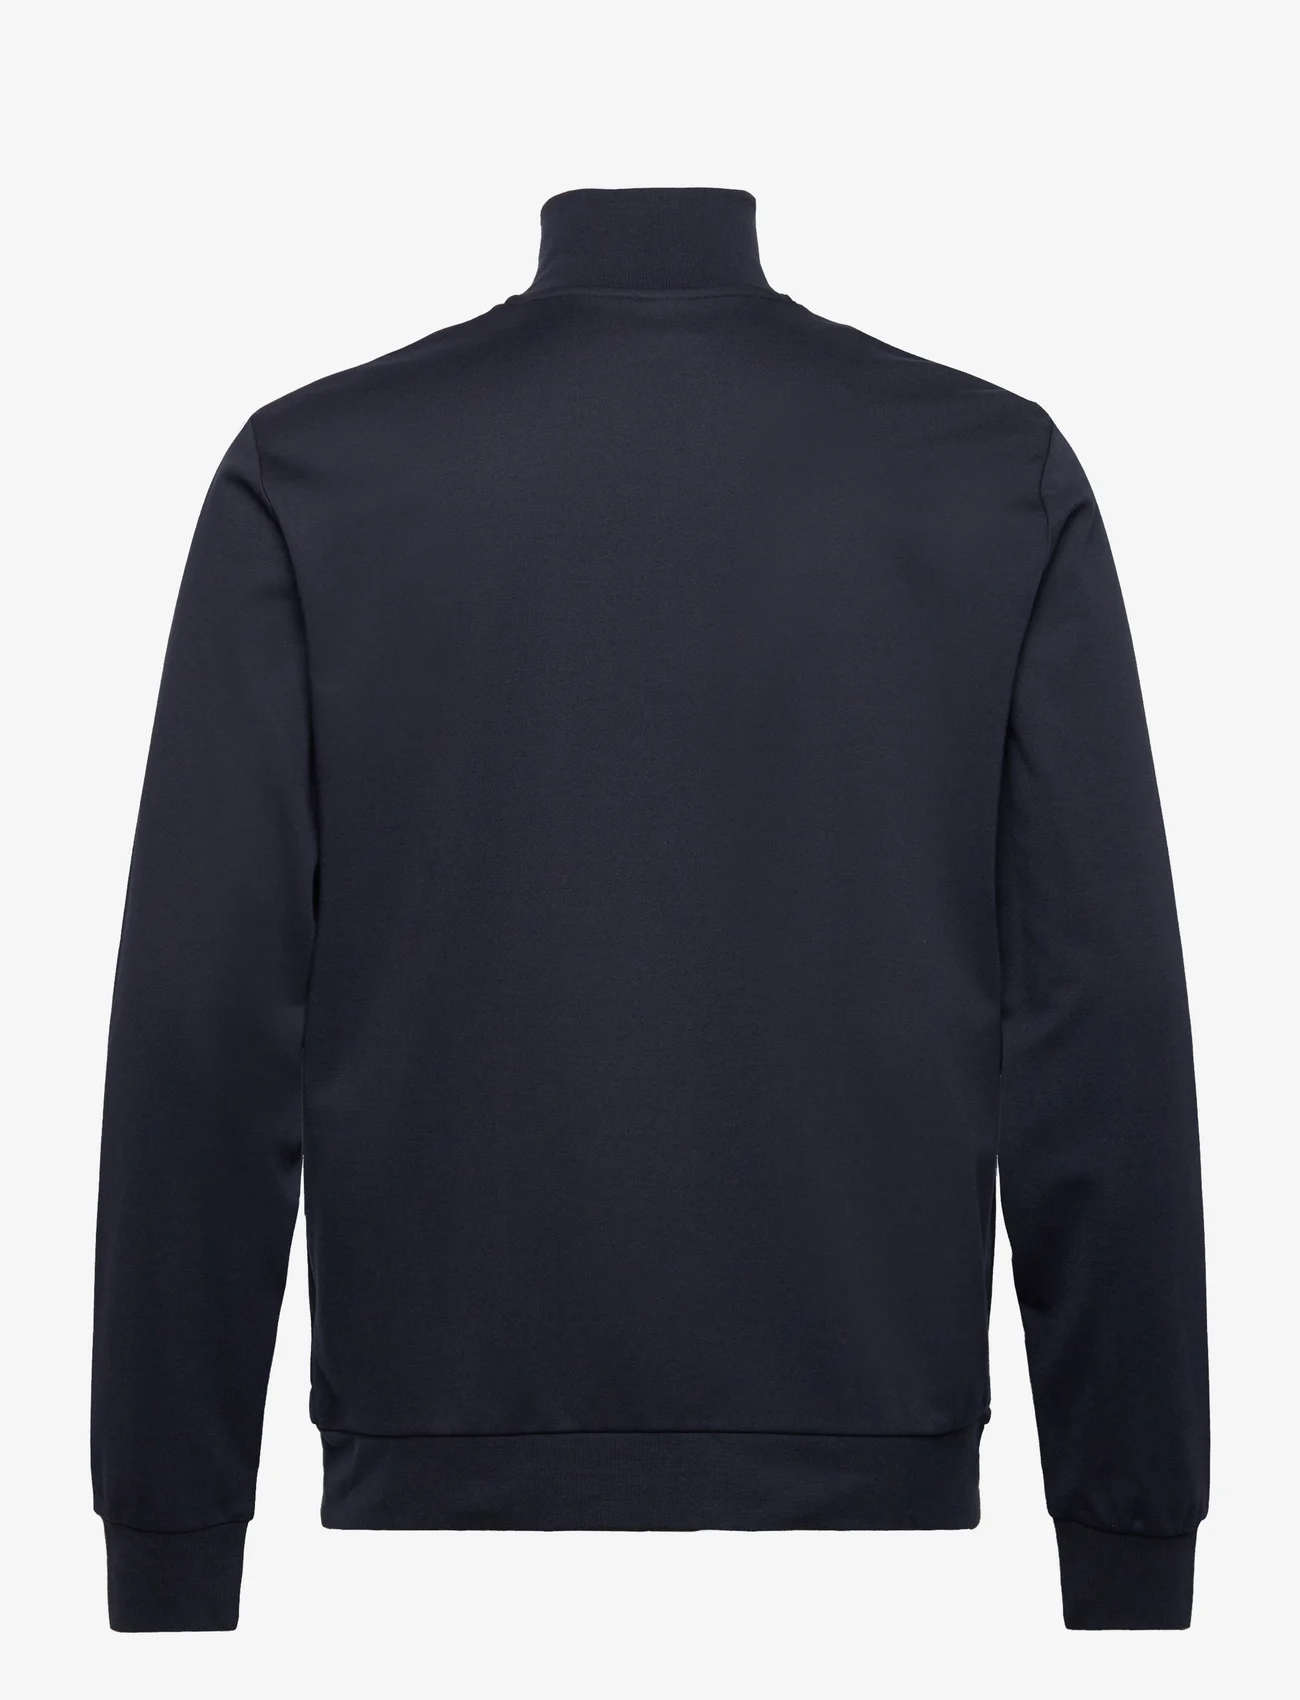 BOSS - Tracksuit Jacket - sweatshirts - dark blue - 1